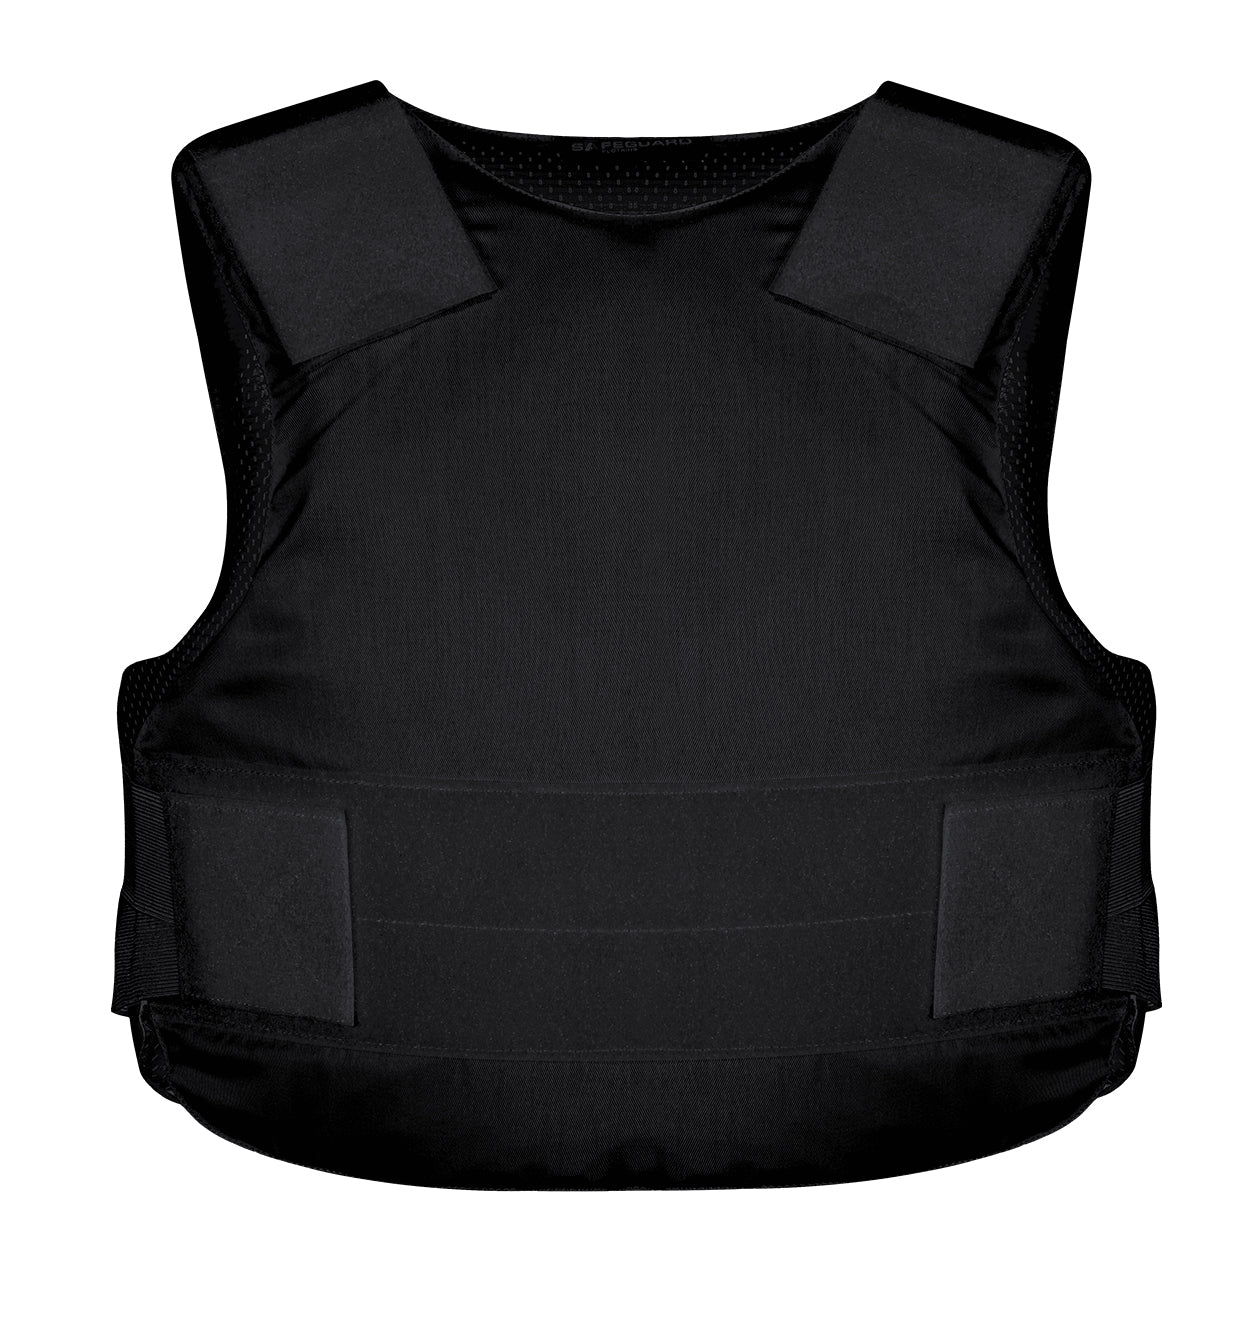 Military Tactical Aramid Bulletproof Vest/with Nij Standard Level